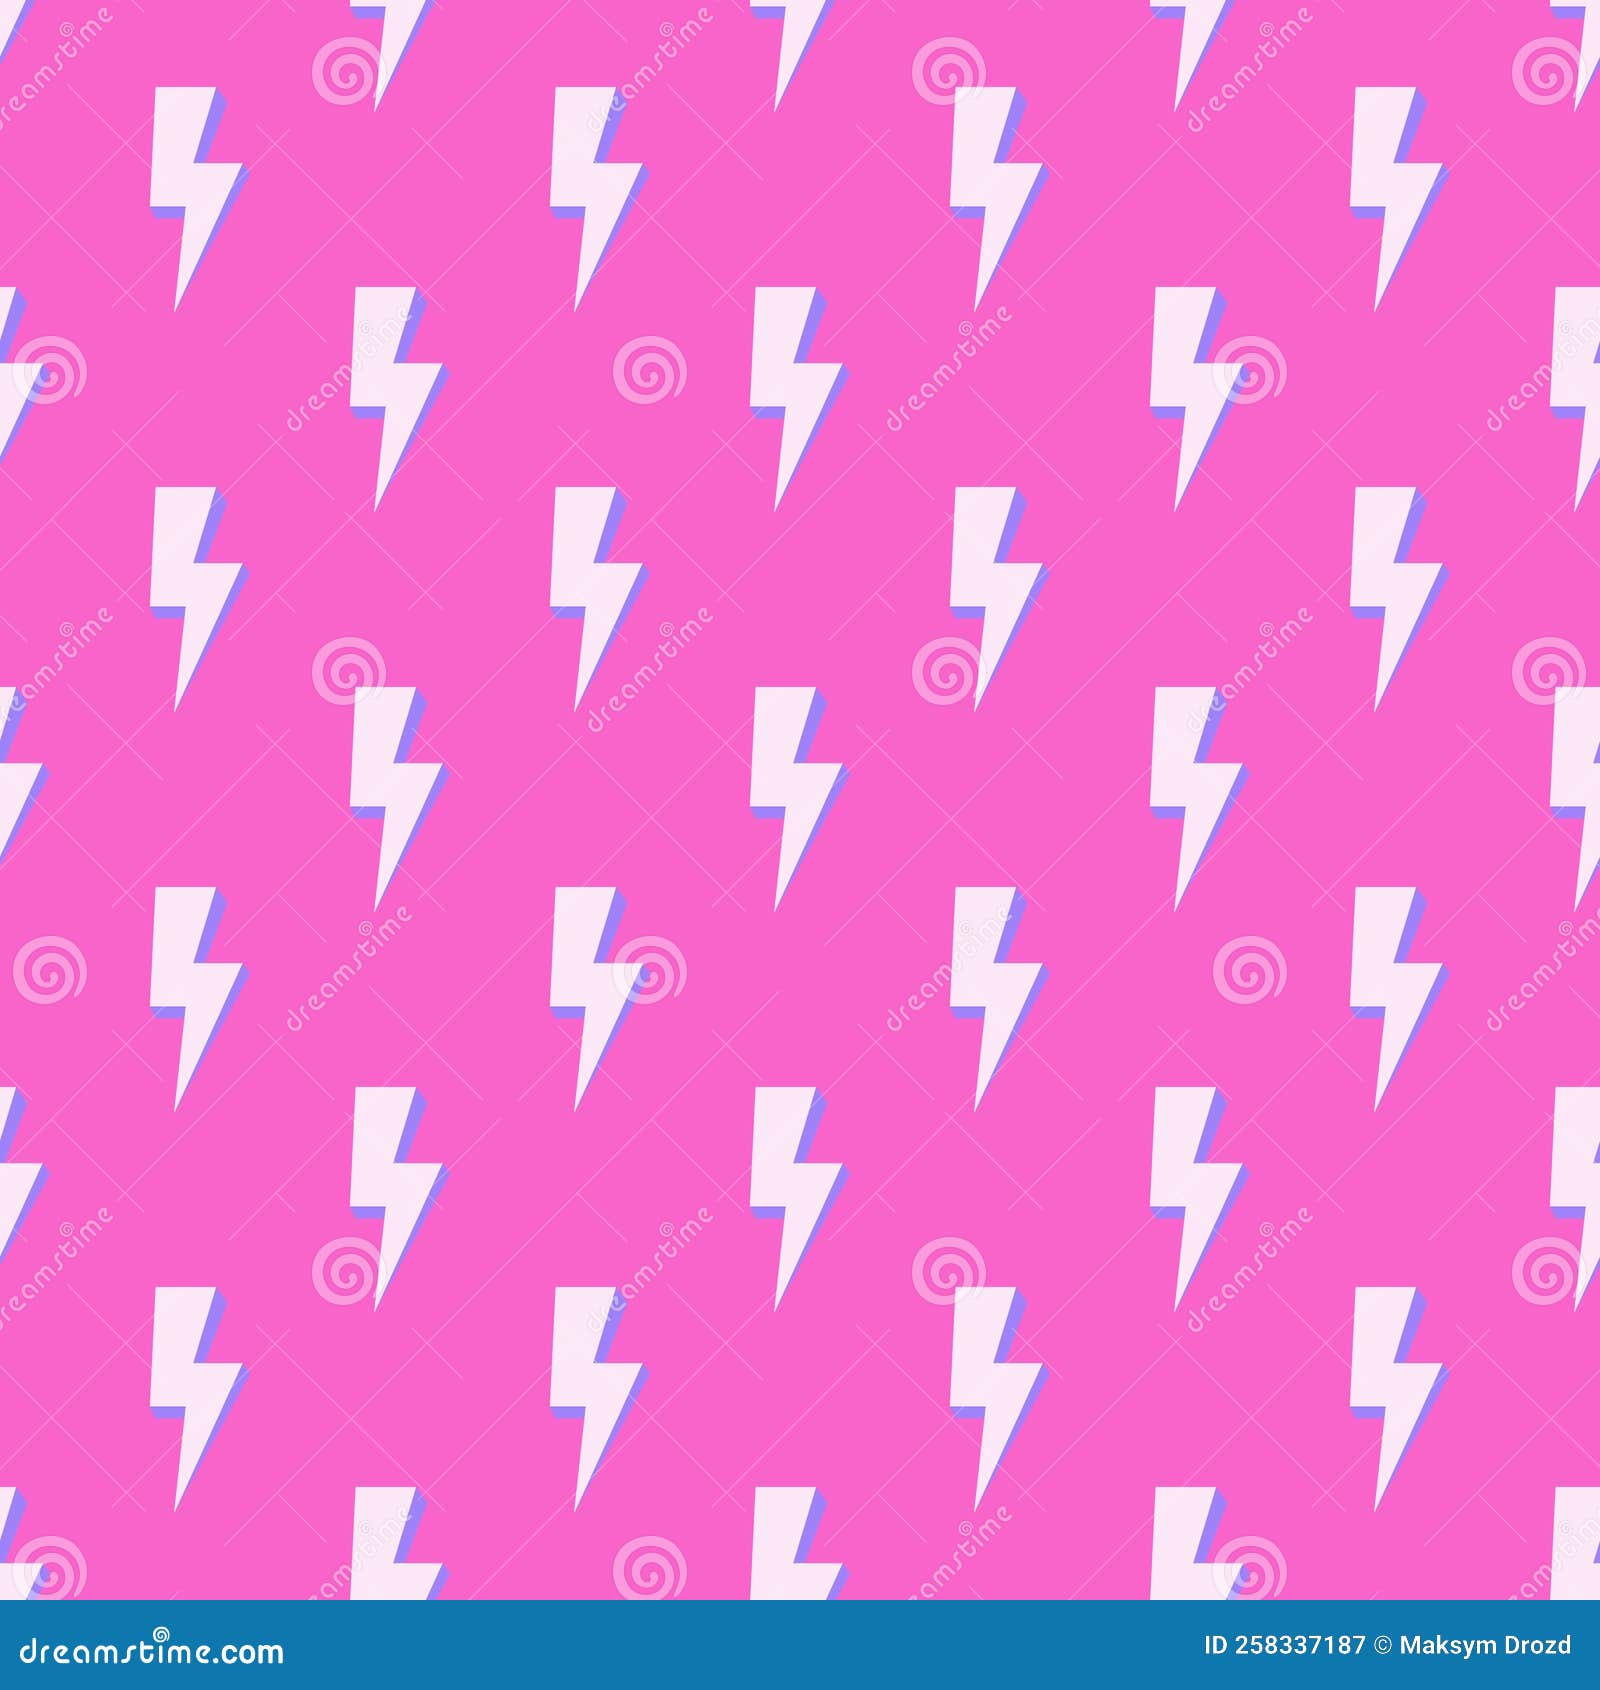 Pink lightning bolt laptop stickers  TenStickers